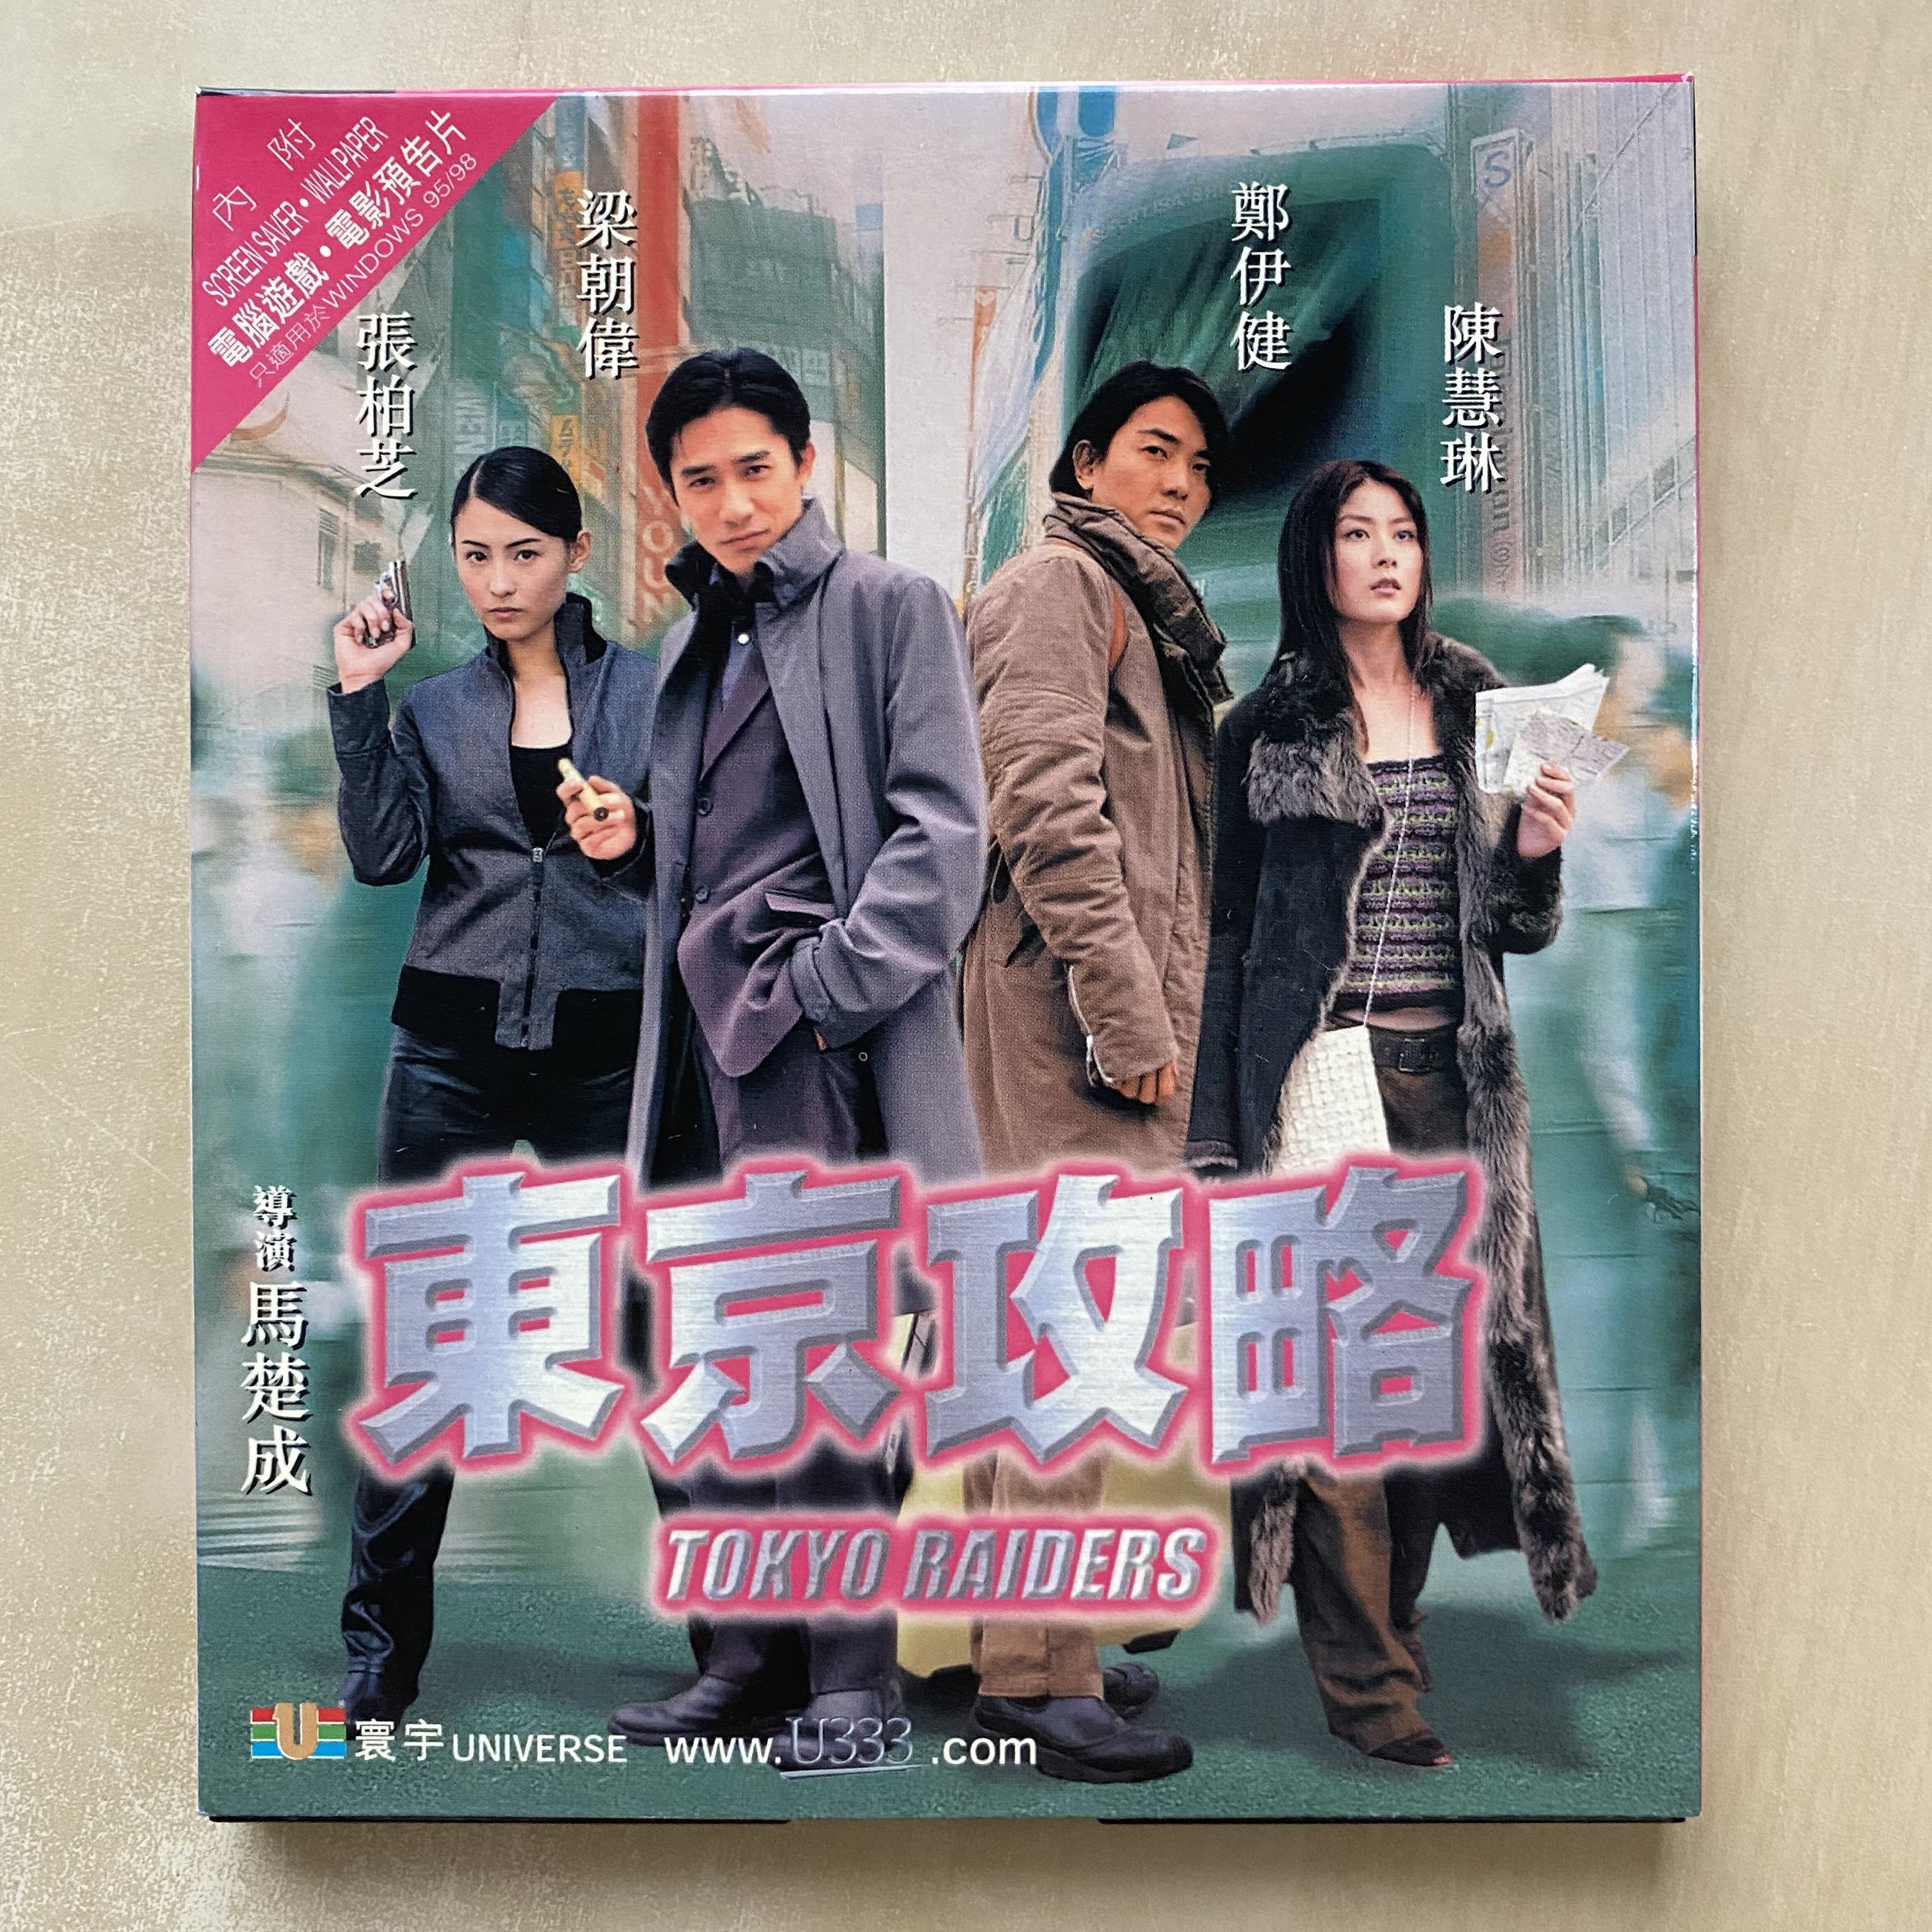 VCD丨東京攻略/ Tokyo Raiders 電影(2VCD), 興趣及遊戲, 音樂、樂器 